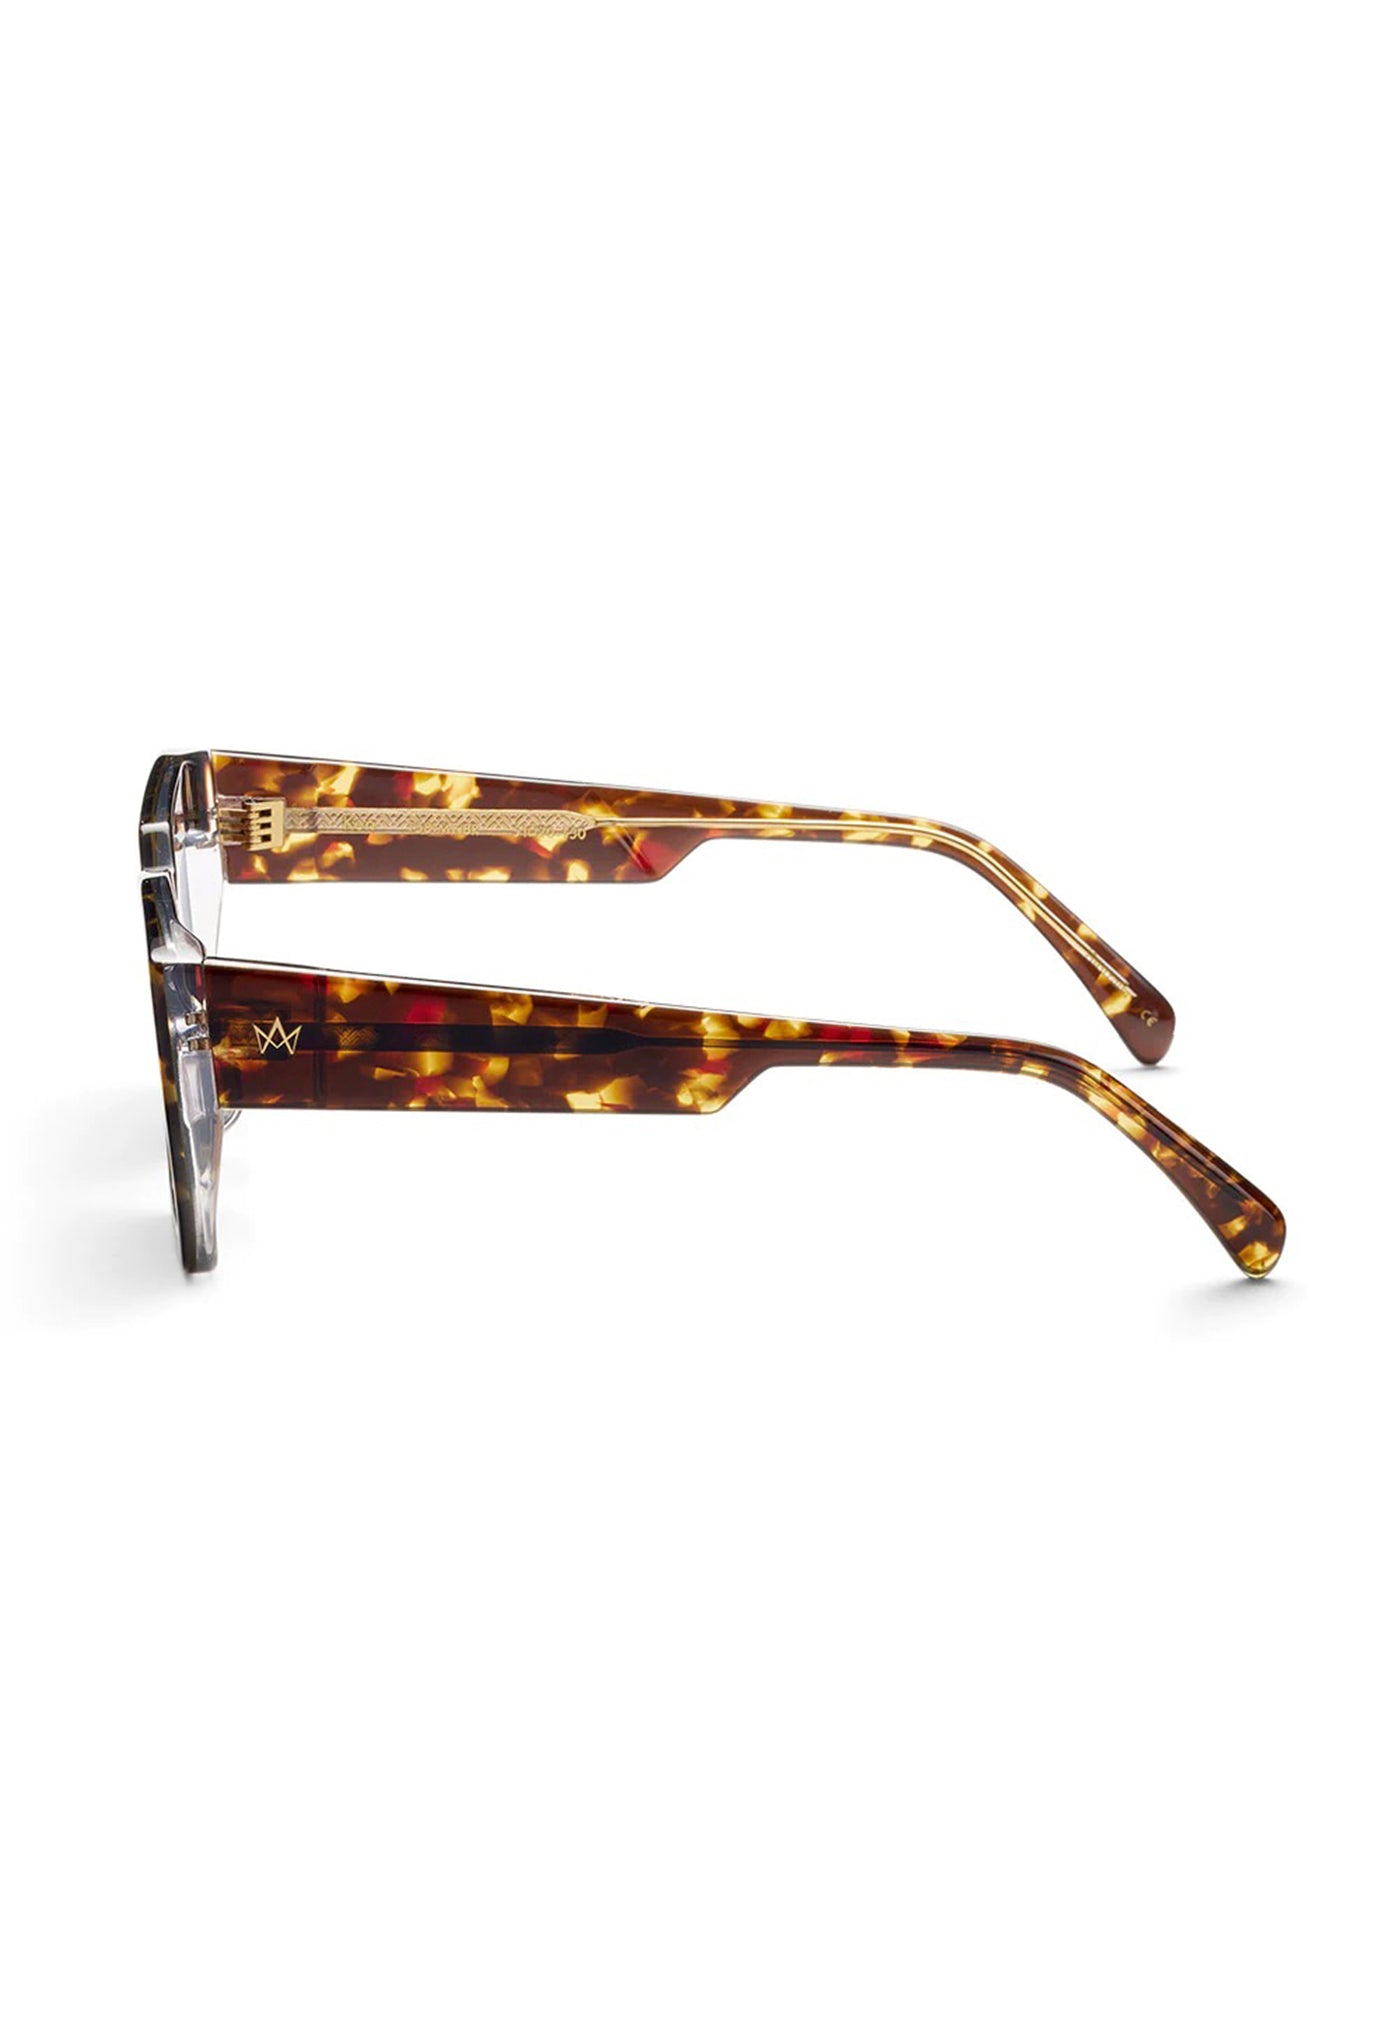 Ken Sunglasses - Mod Tort sold by Angel Divine